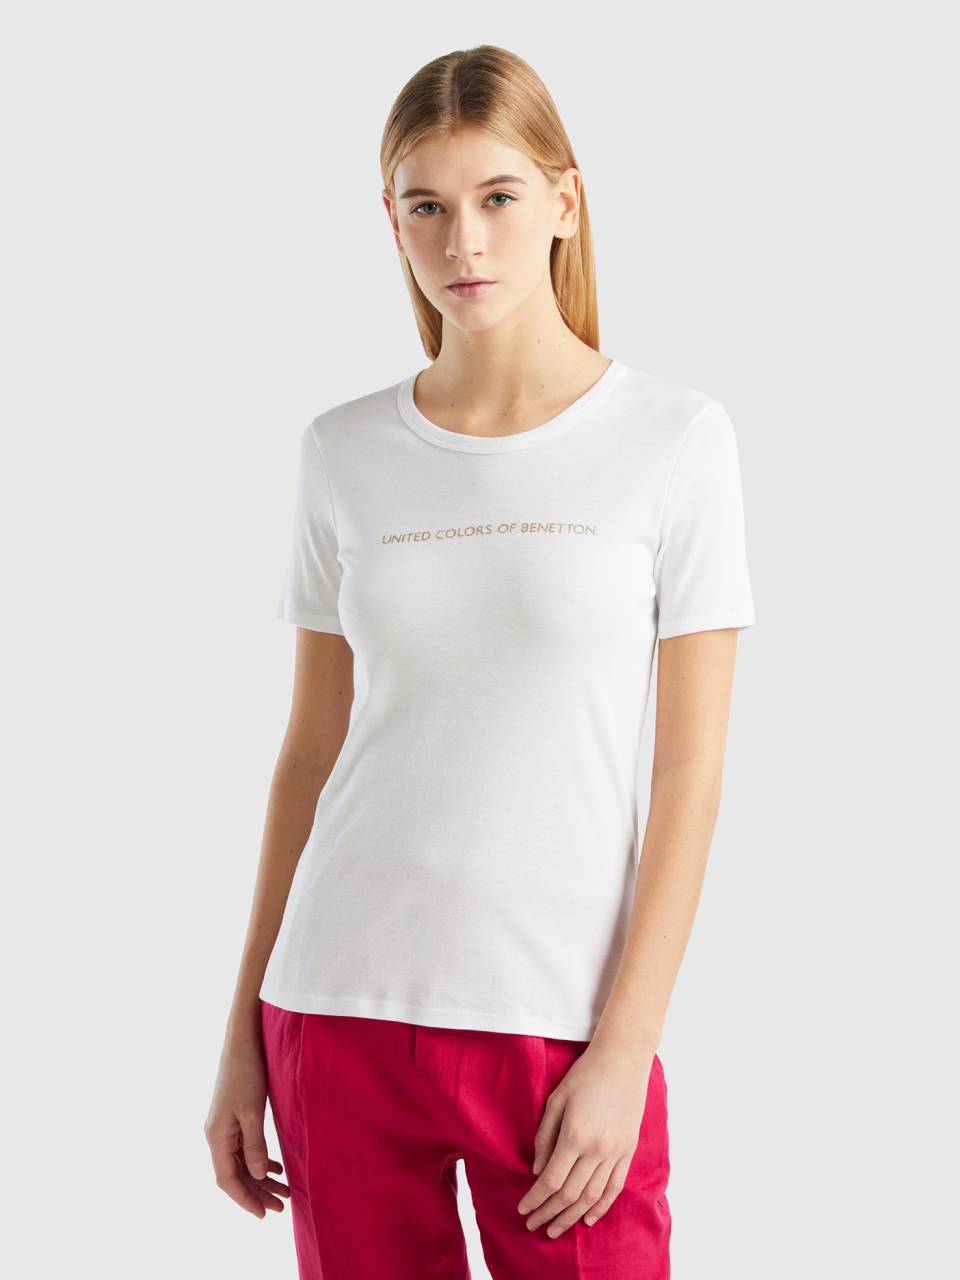 in 100% | logo Benetton print - cotton T-shirt glitter White with